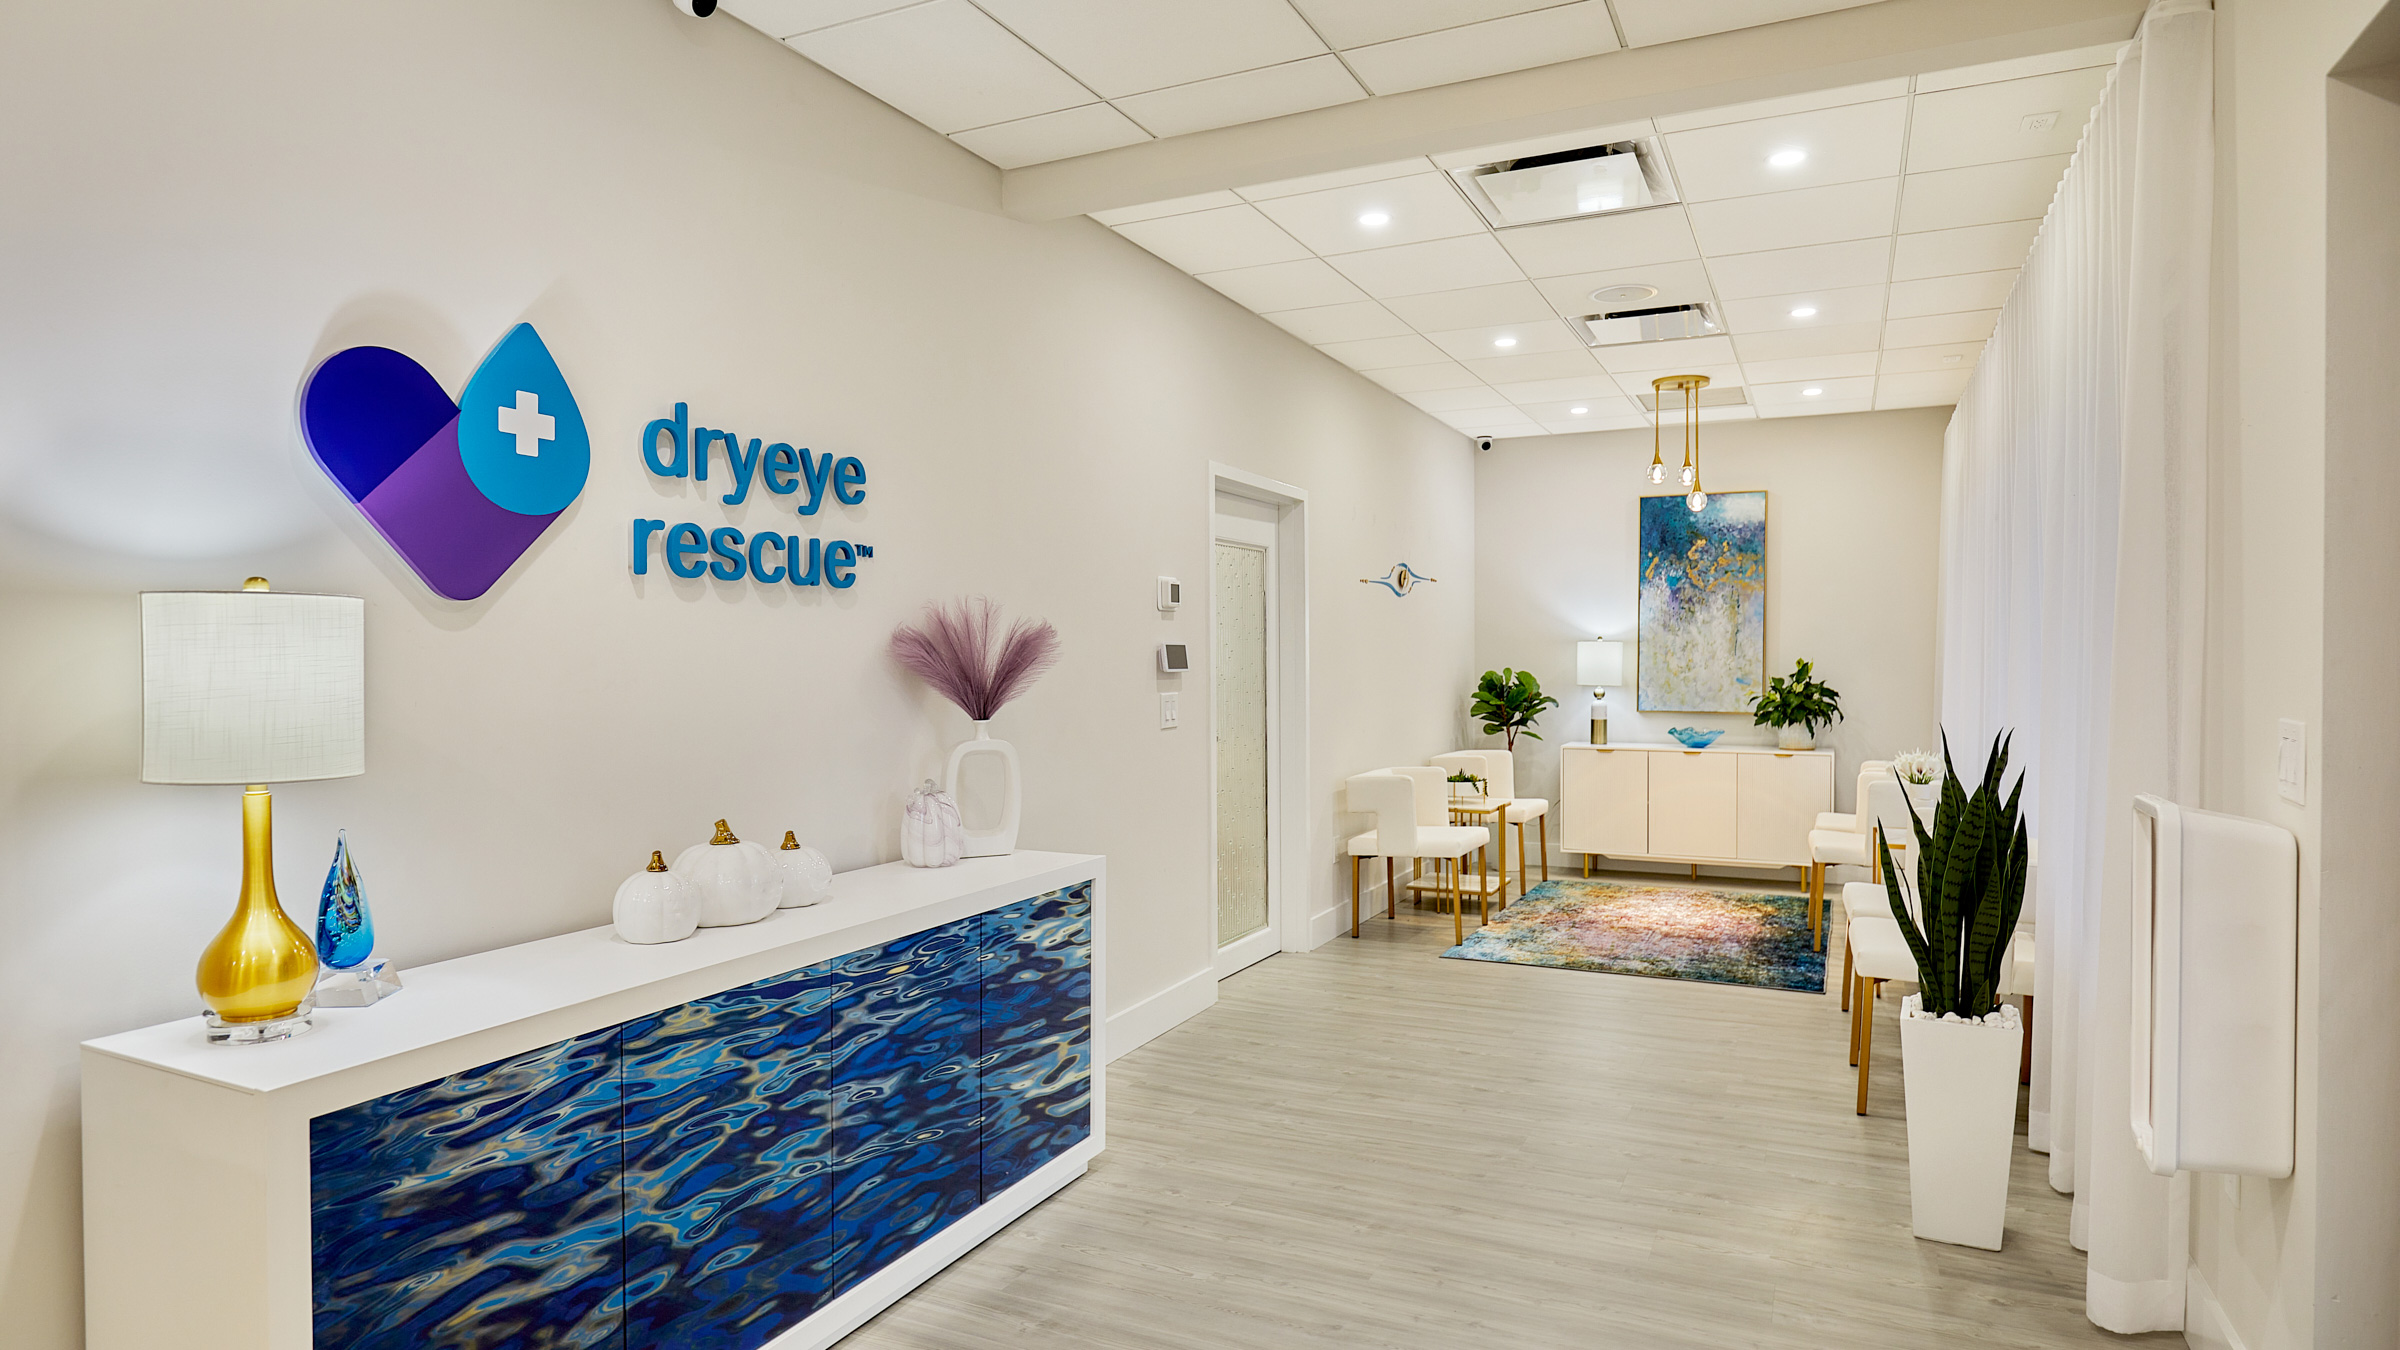 dry eye rescue clinic reception